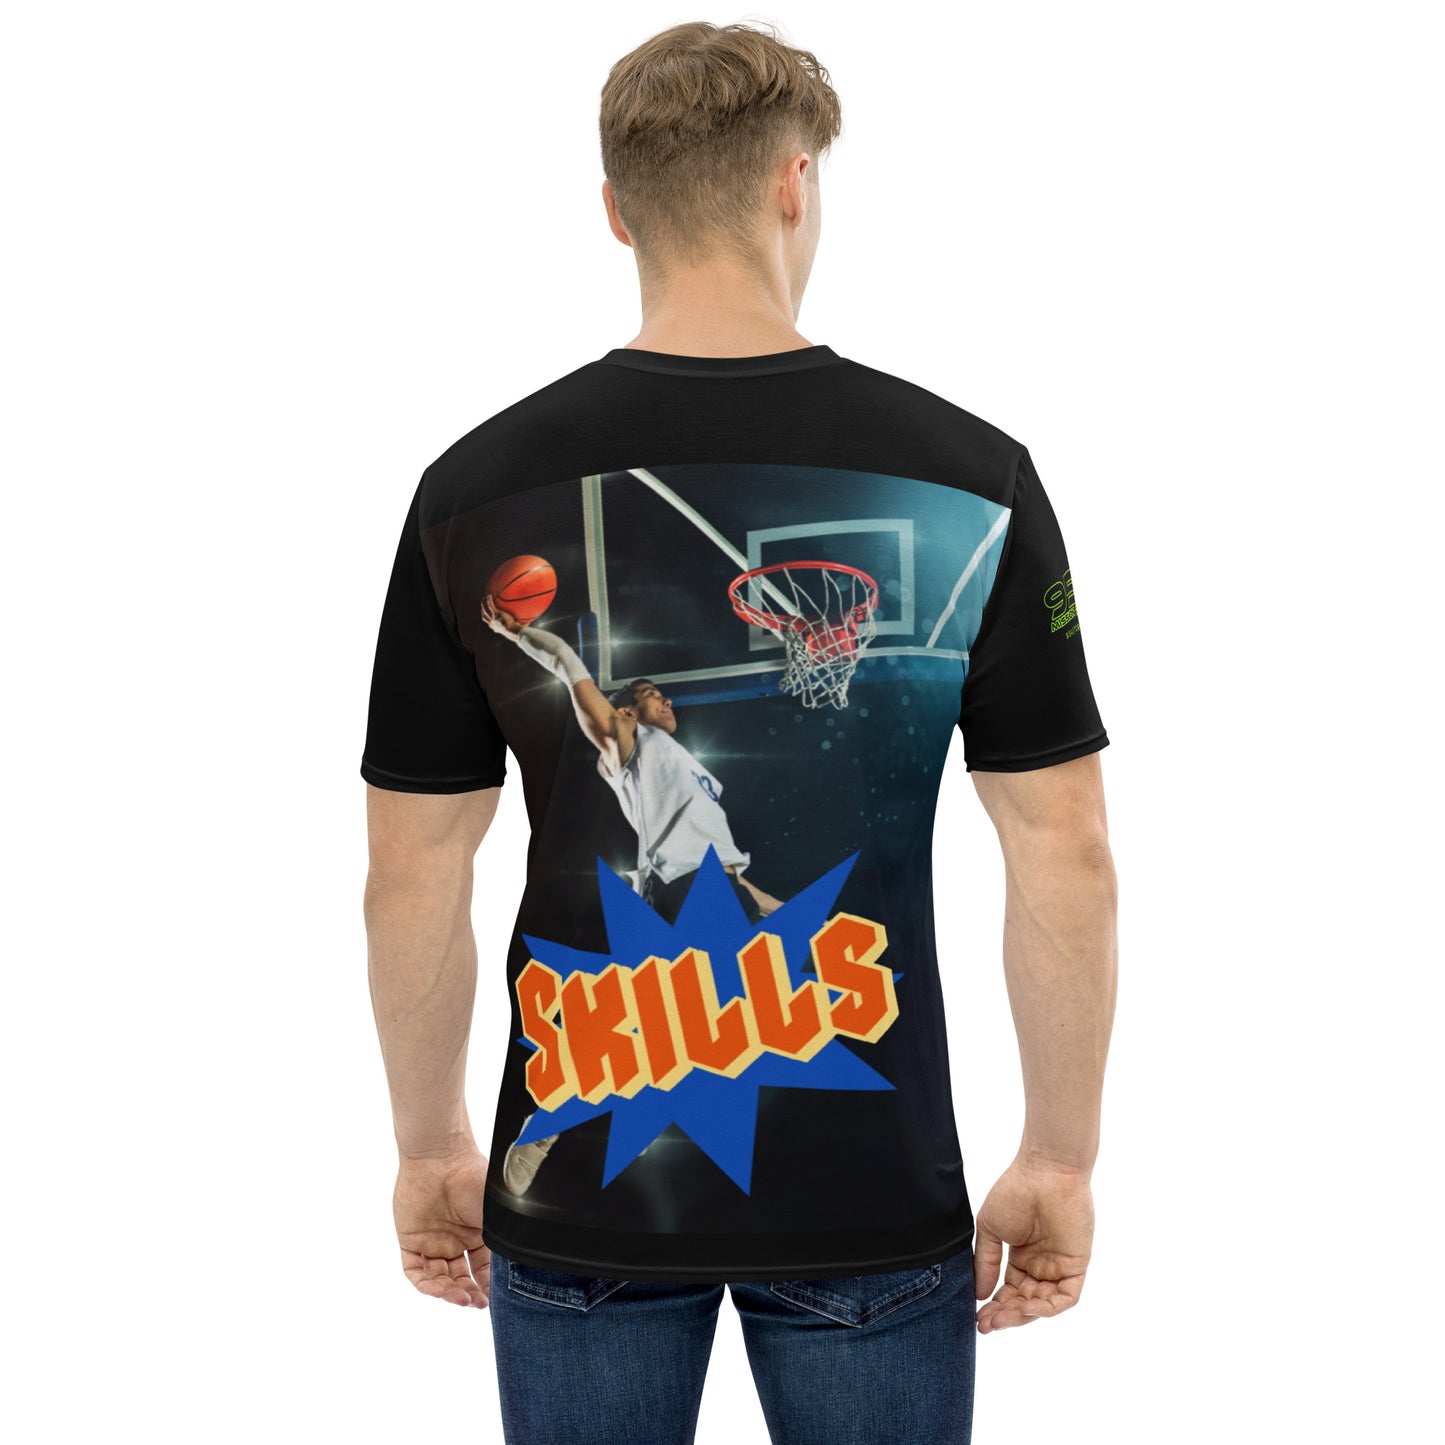 SKILLS Basketball 954 Signature Men's t-shirt